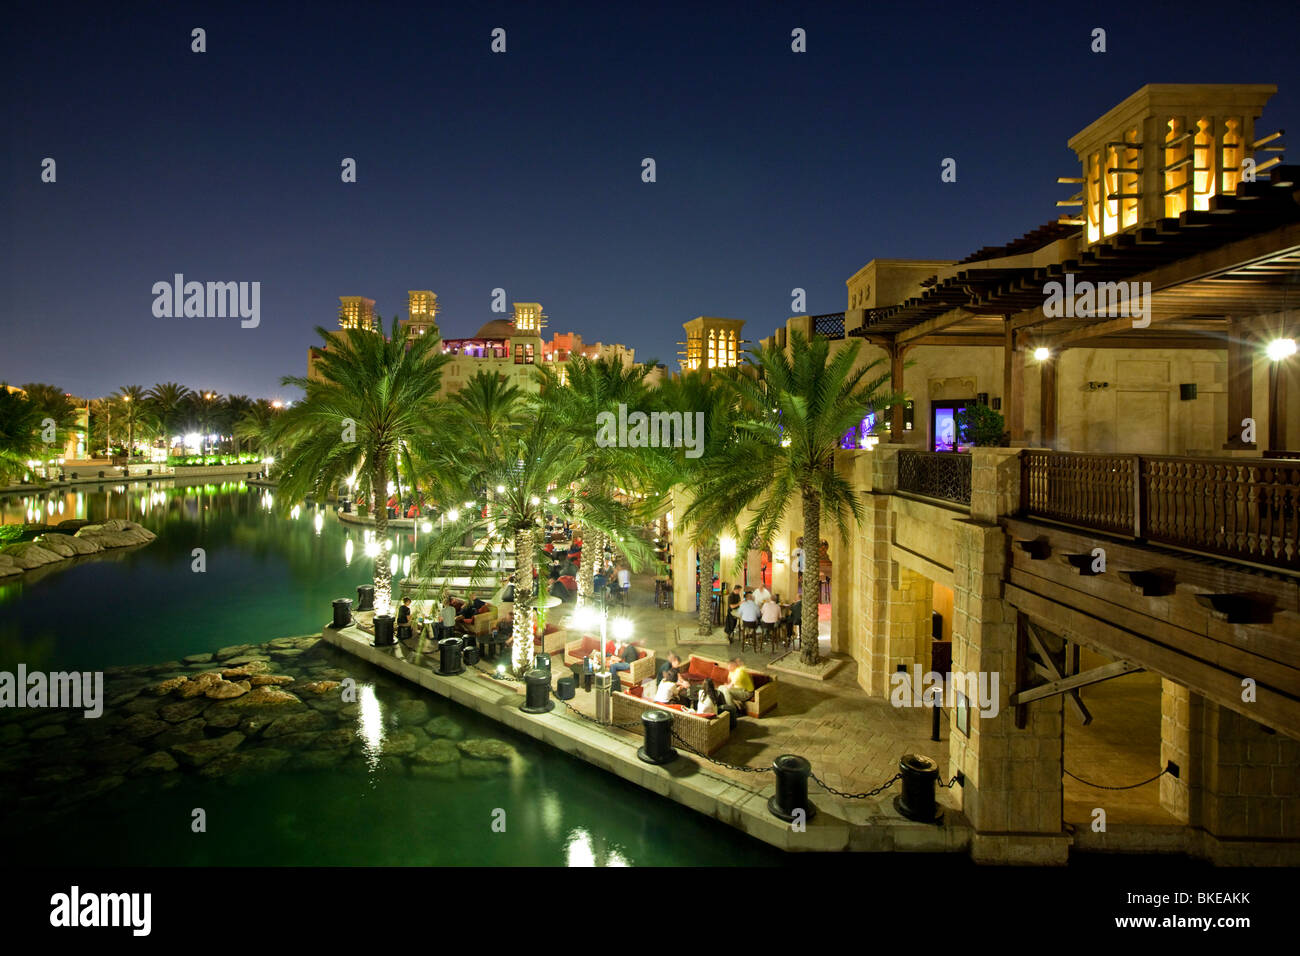 Medinat Jumeirah in the evening, canal, illumination, bars, restaurants, Dubai, United Arab Emirates Stock Photo